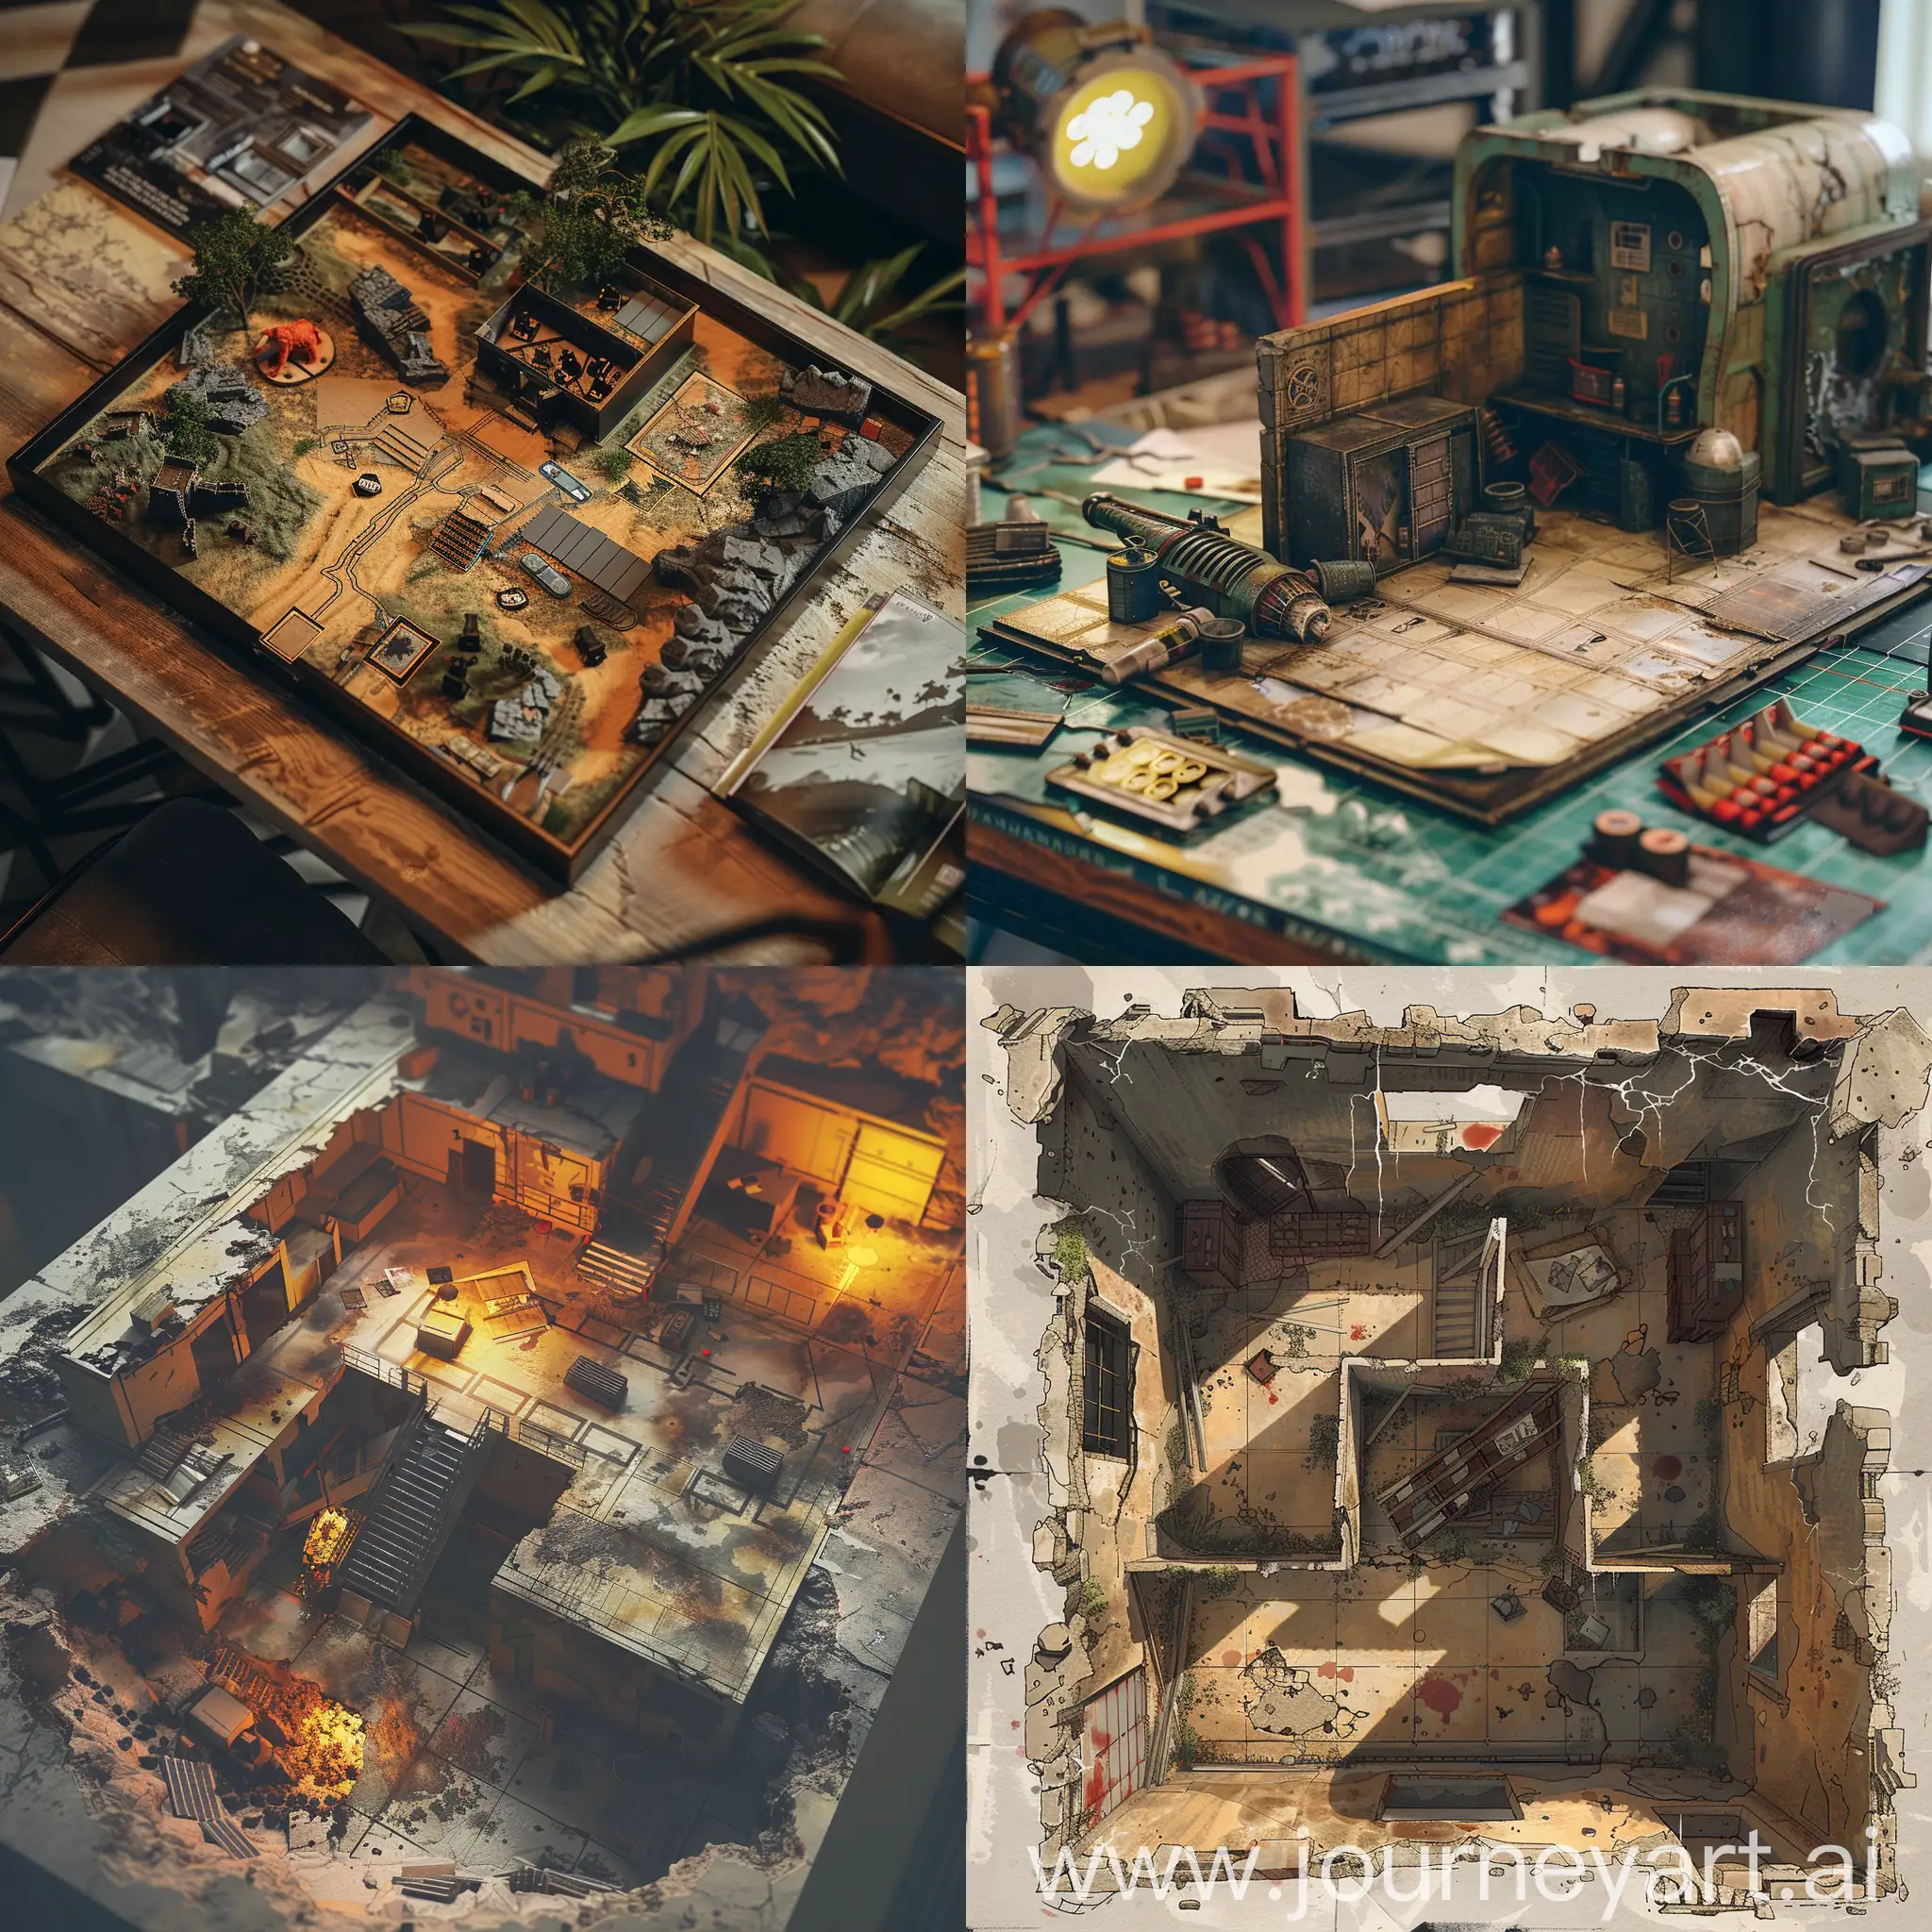 PostApocalyptic-Bunker-Survival-Tabletop-Game-Design